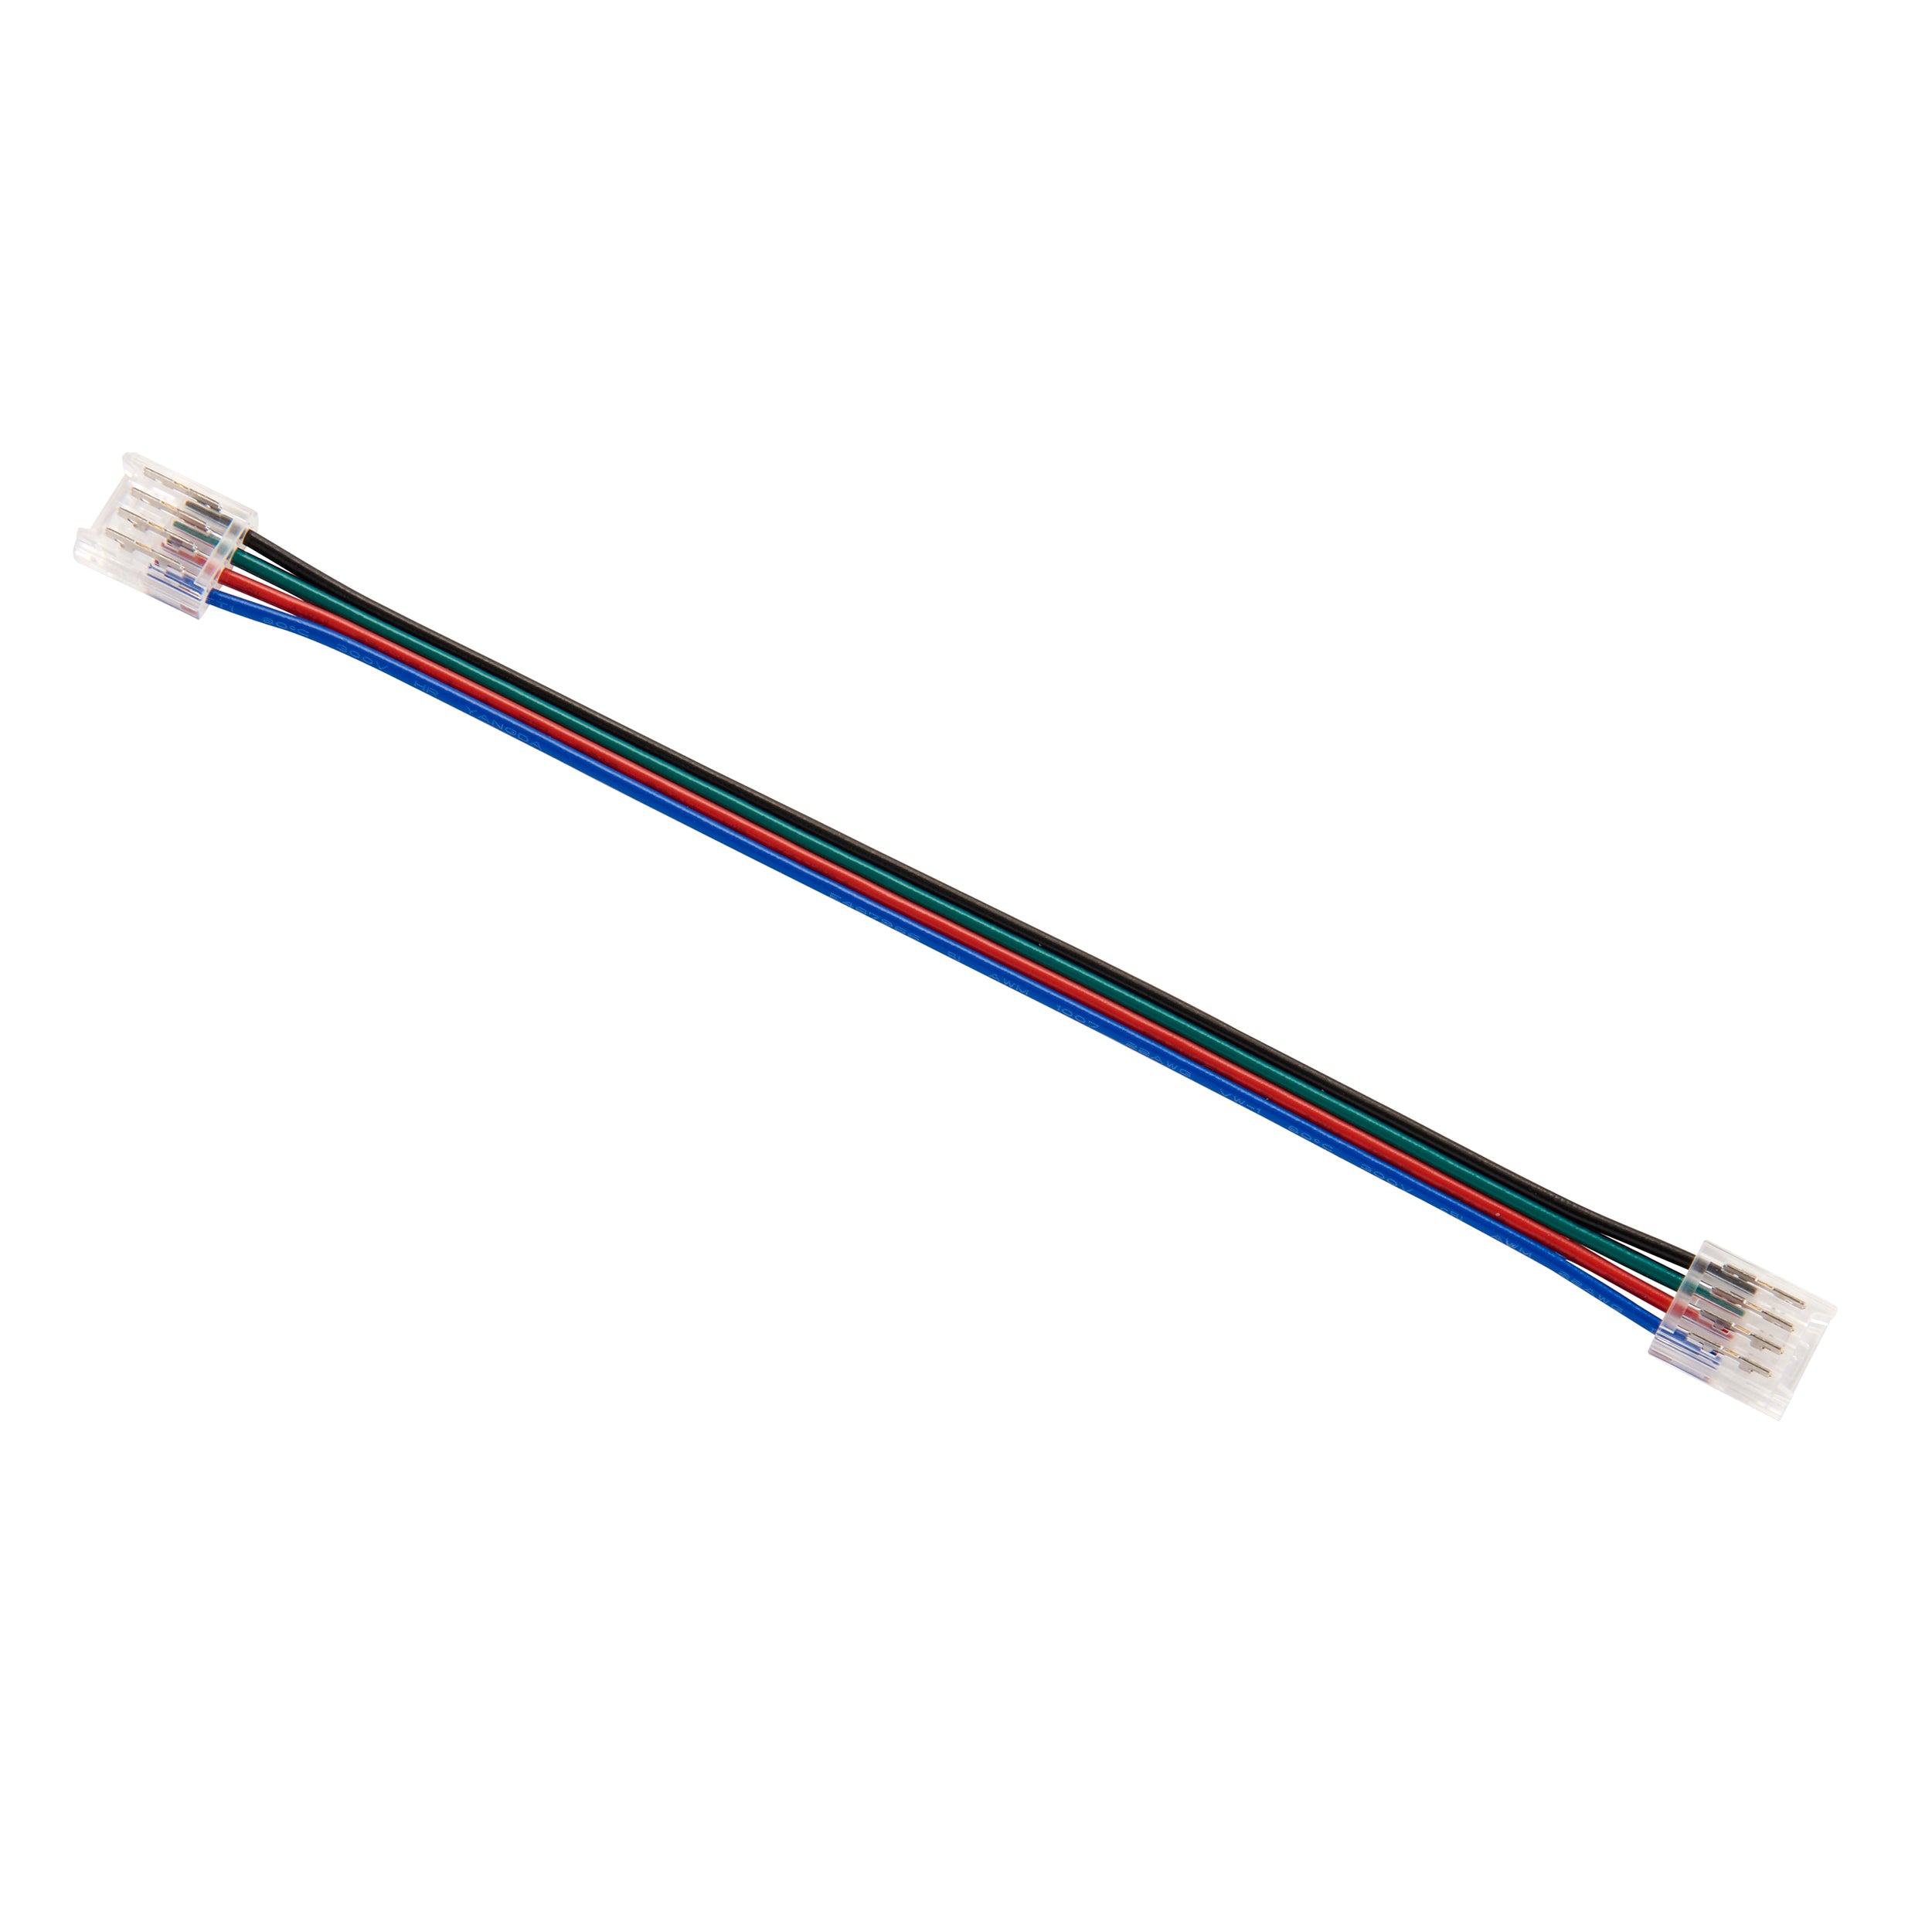 OrionRGB Flexible Strip to Strip Connector